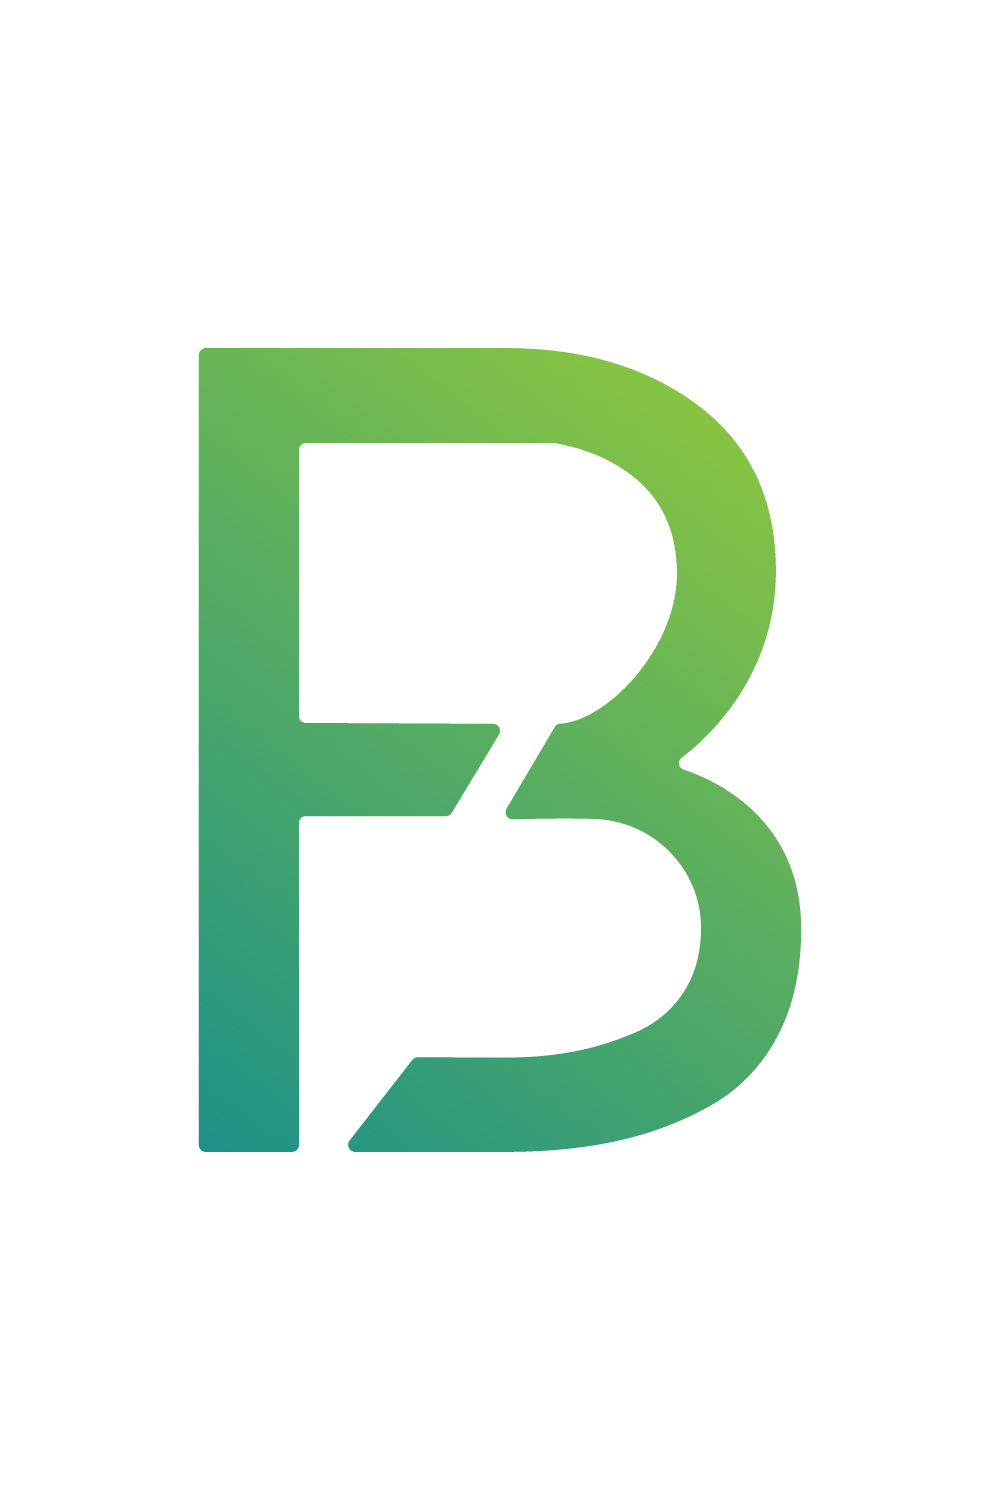 Initials FB letters logo design vector template arts FB logo design green color iconic design BF best logo monogram design pinterest preview image.